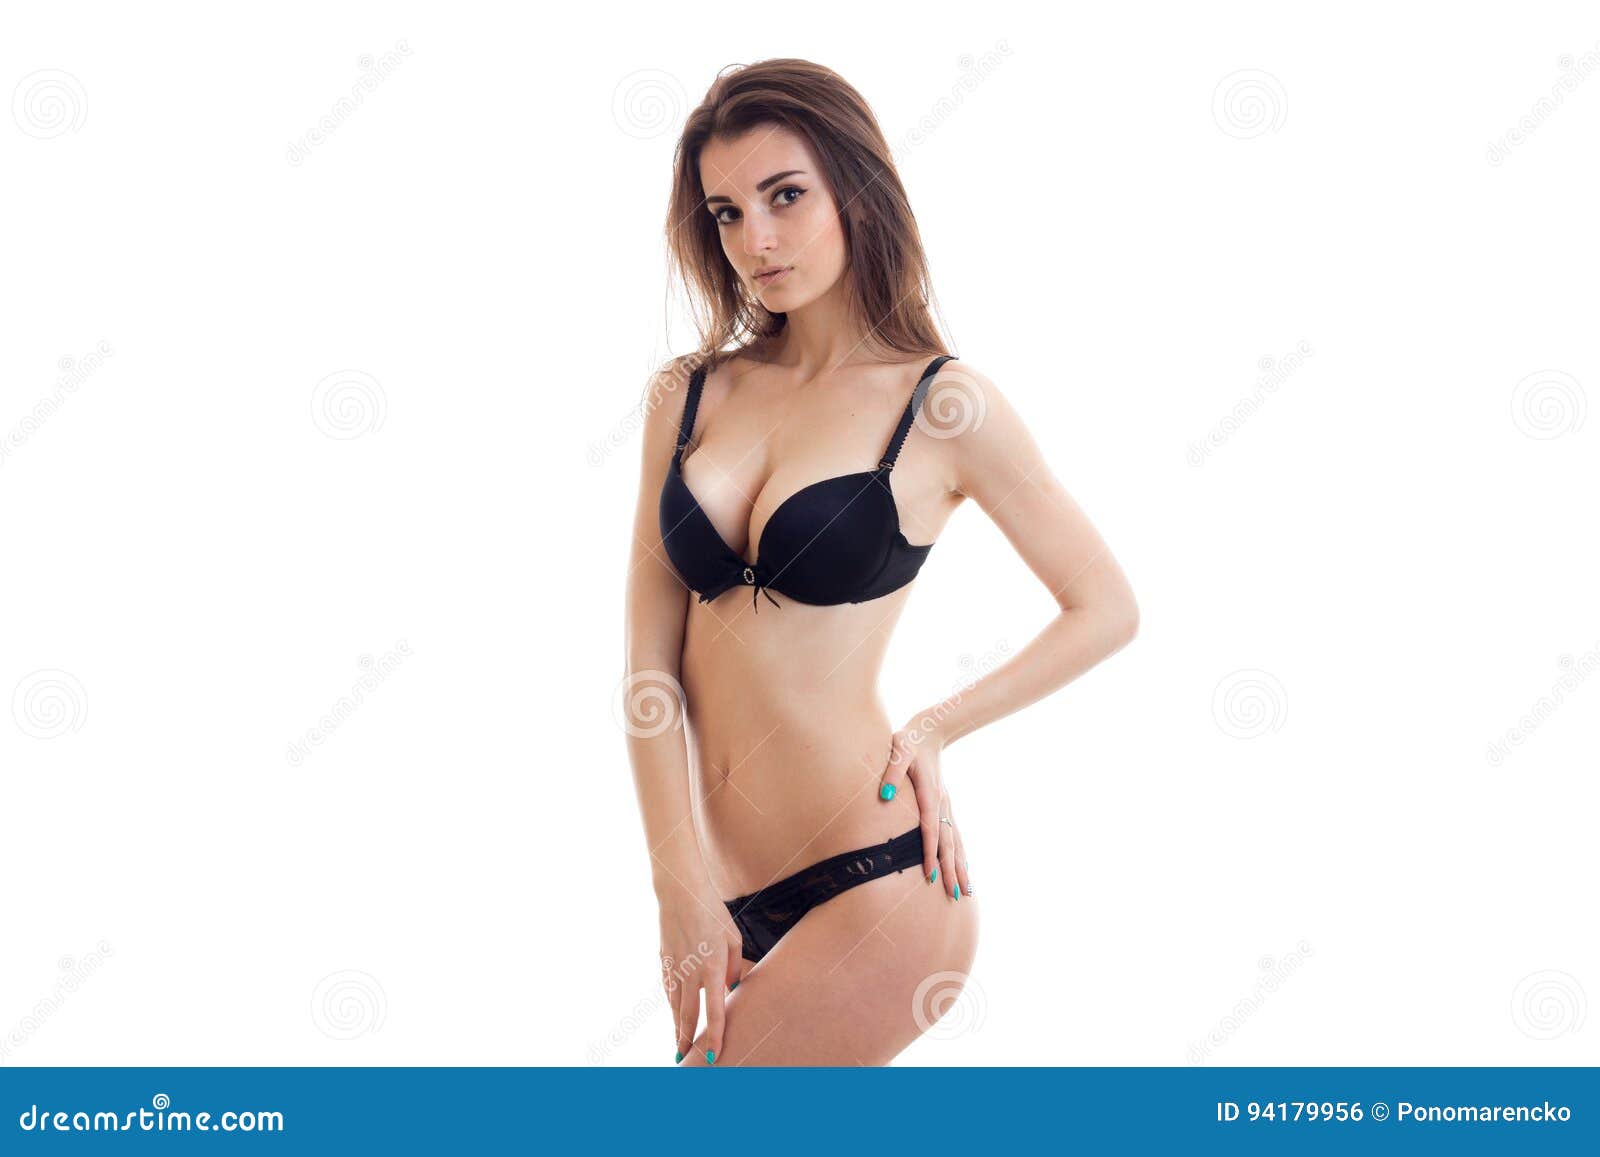 cruz daniel add skinny girl giant boobs photo